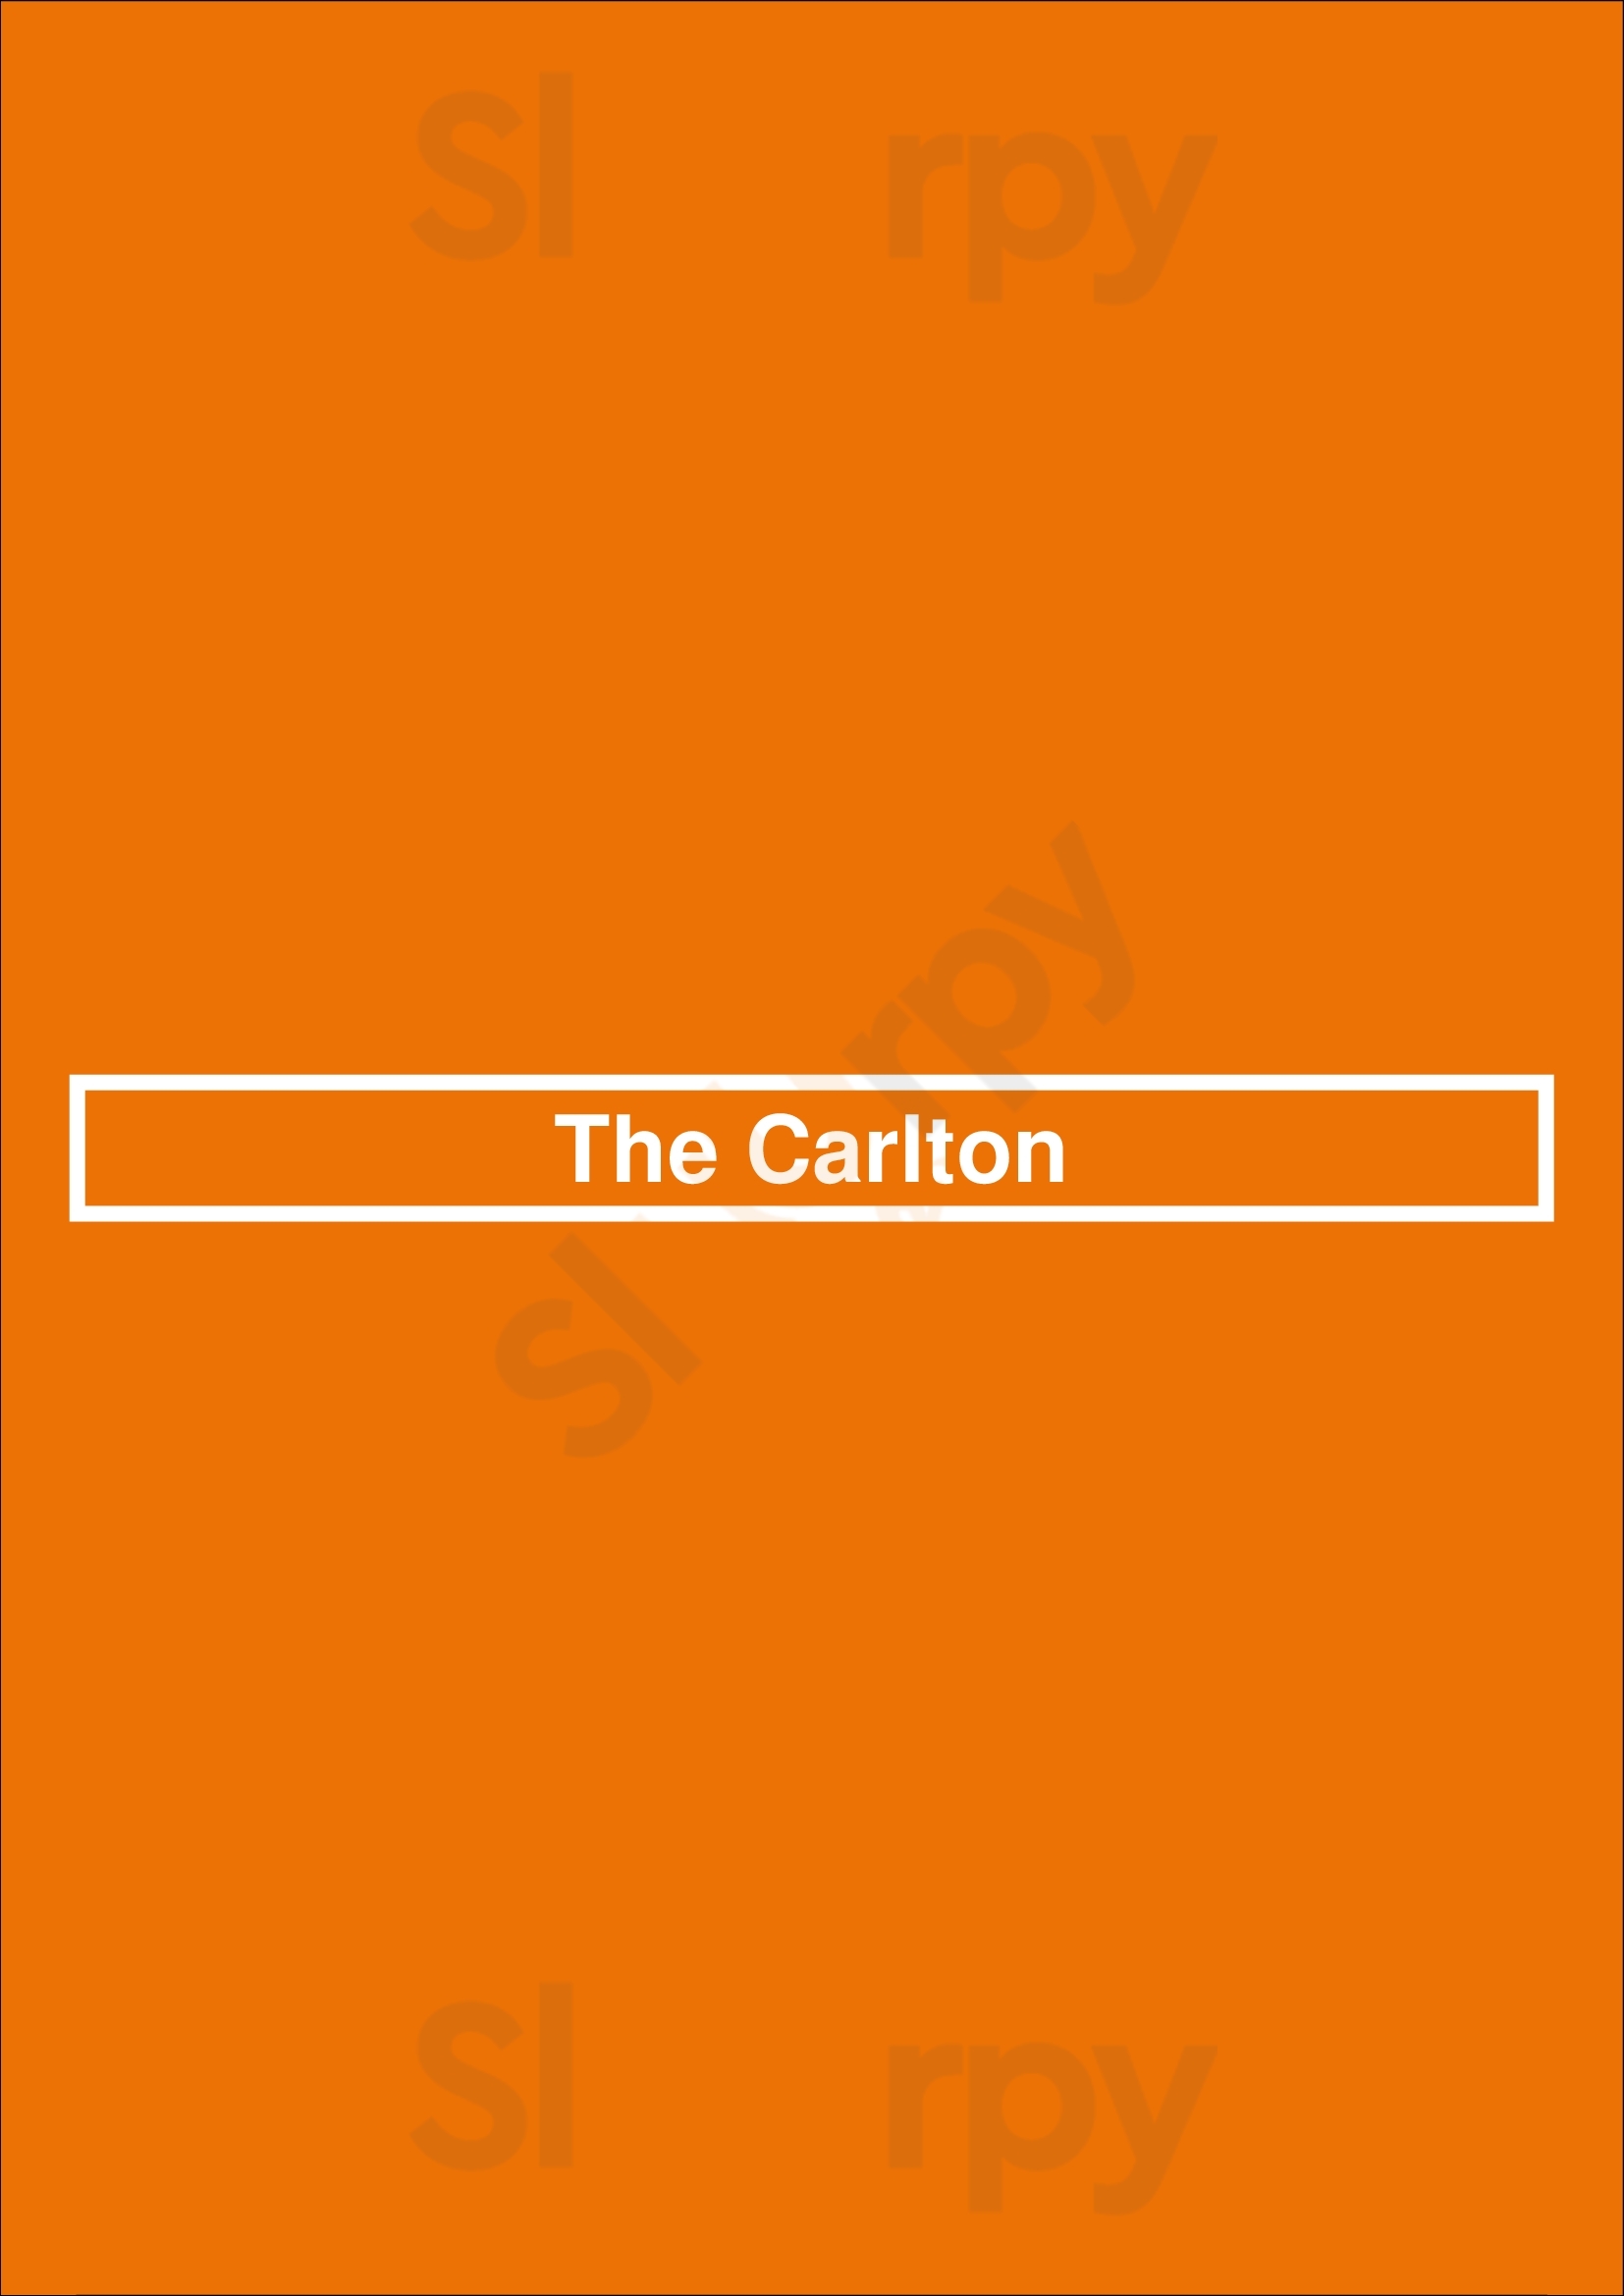 The Carlton Pittsburgh Menu - 1